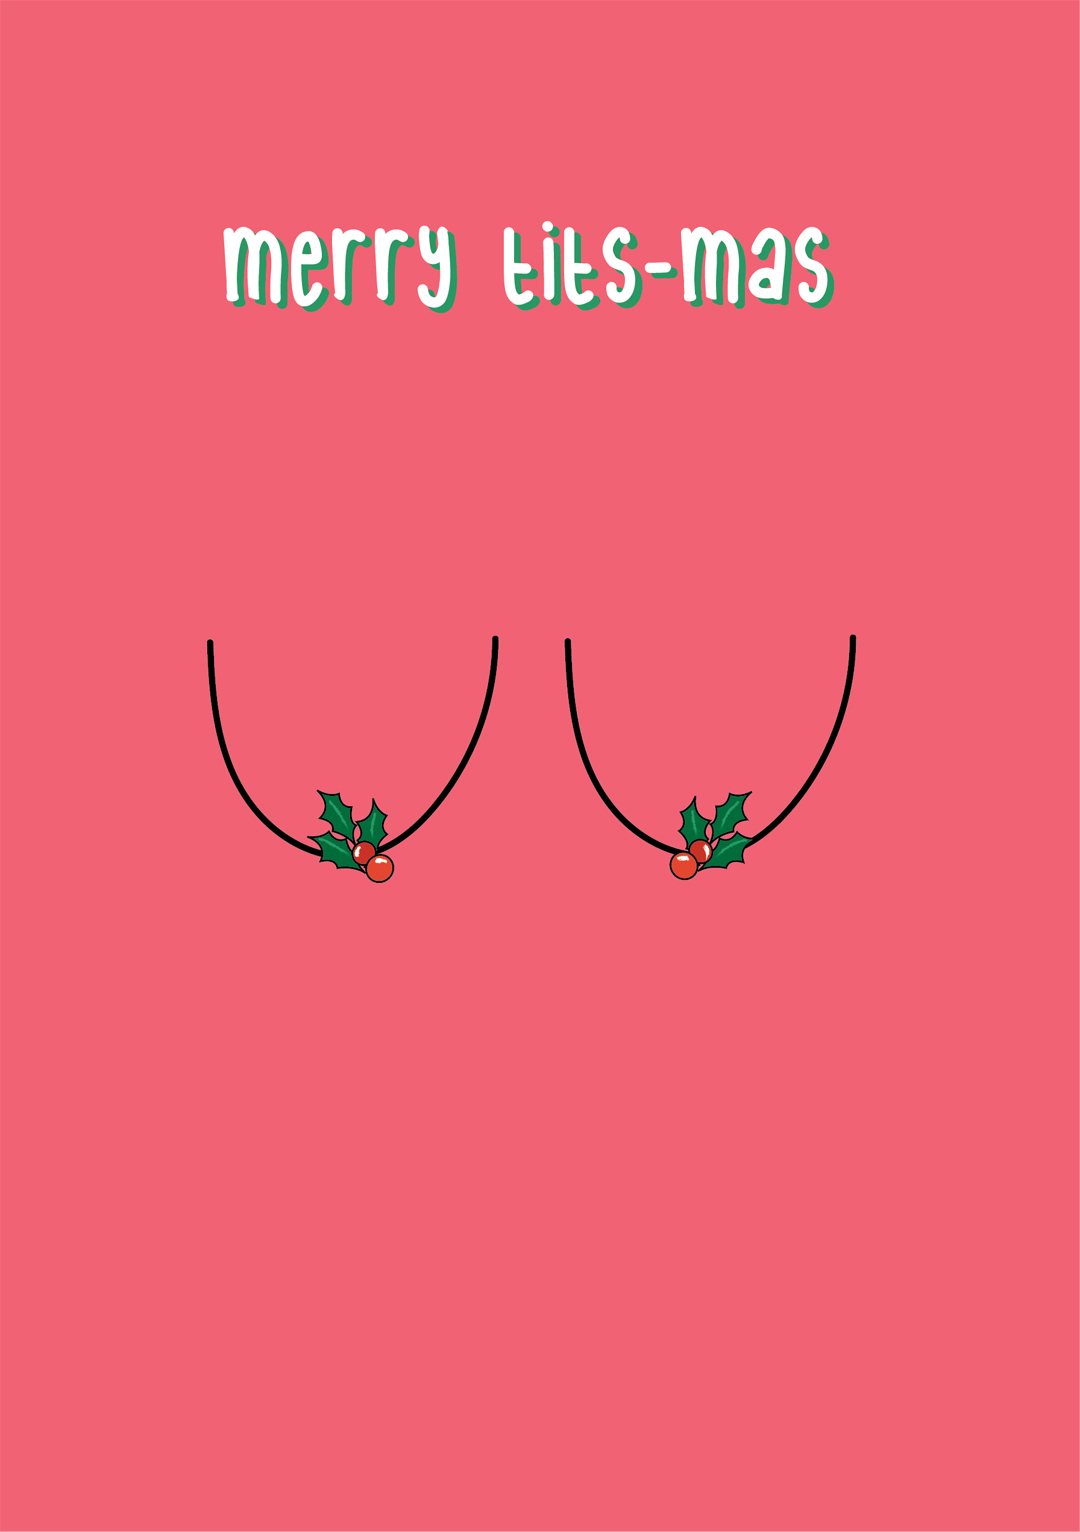 merry tits-mas funny christmas card